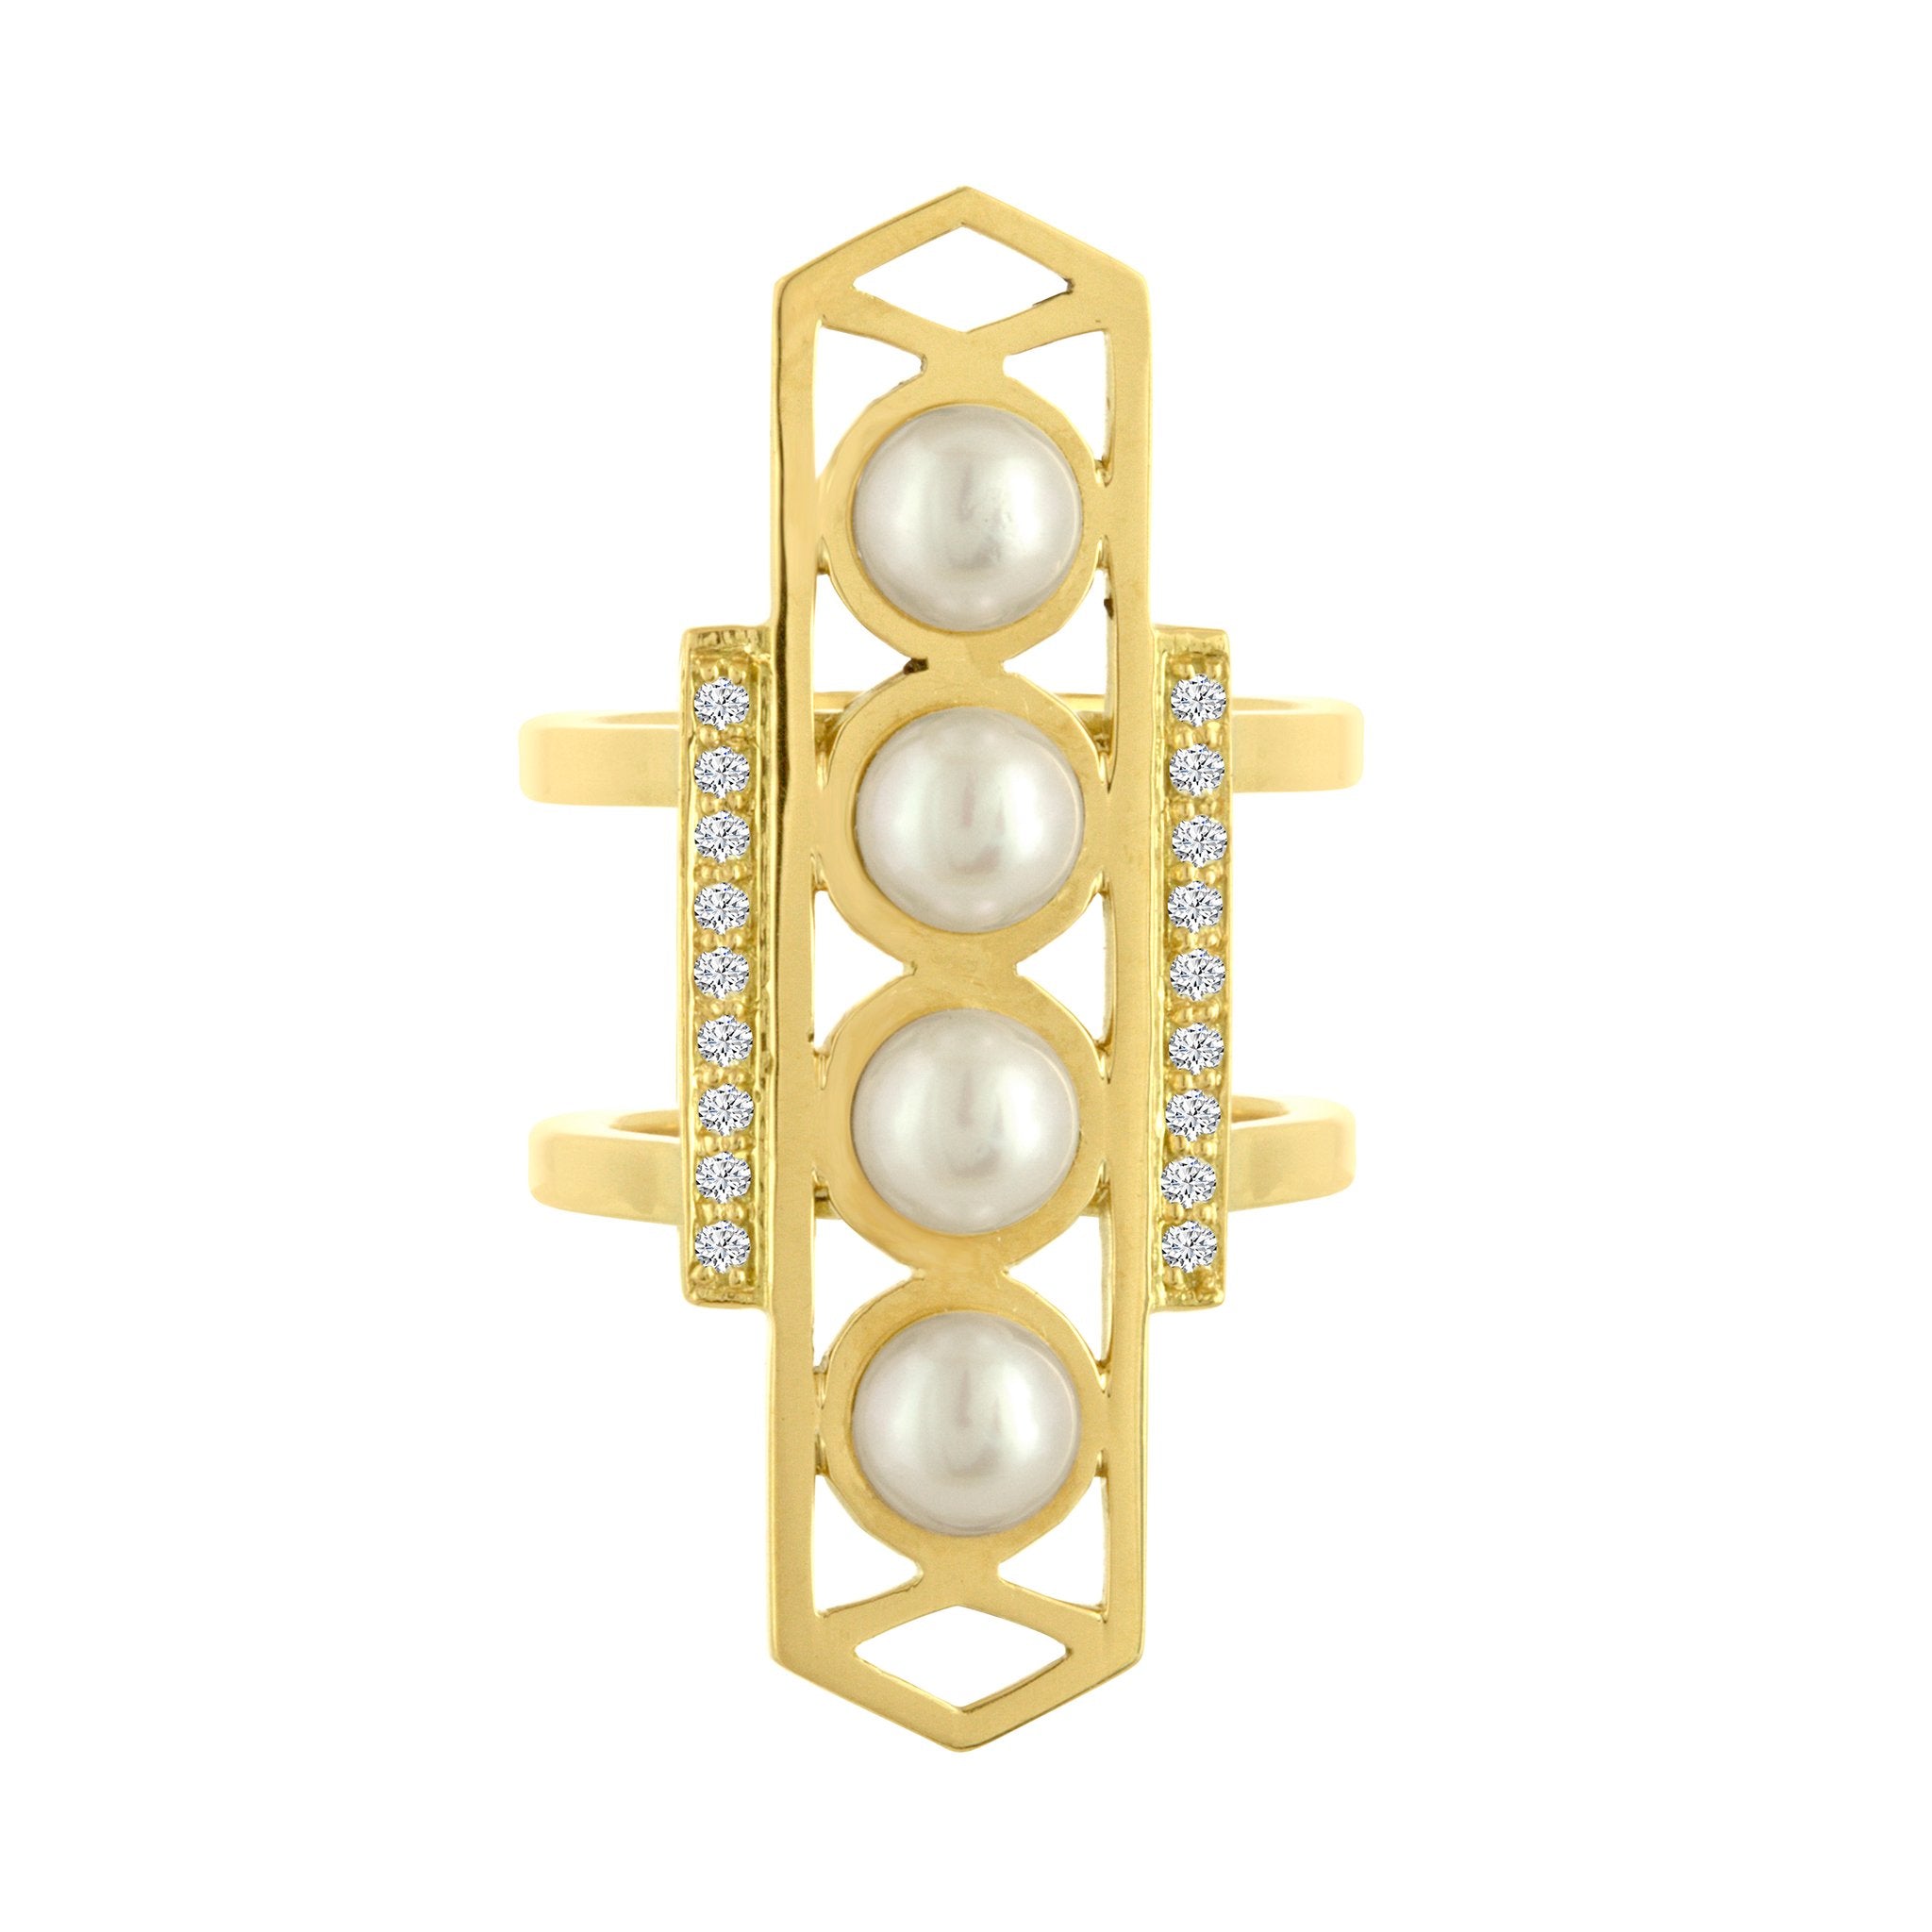 Cosmo Ring: 18k Gold, White Pearls, Diamonds